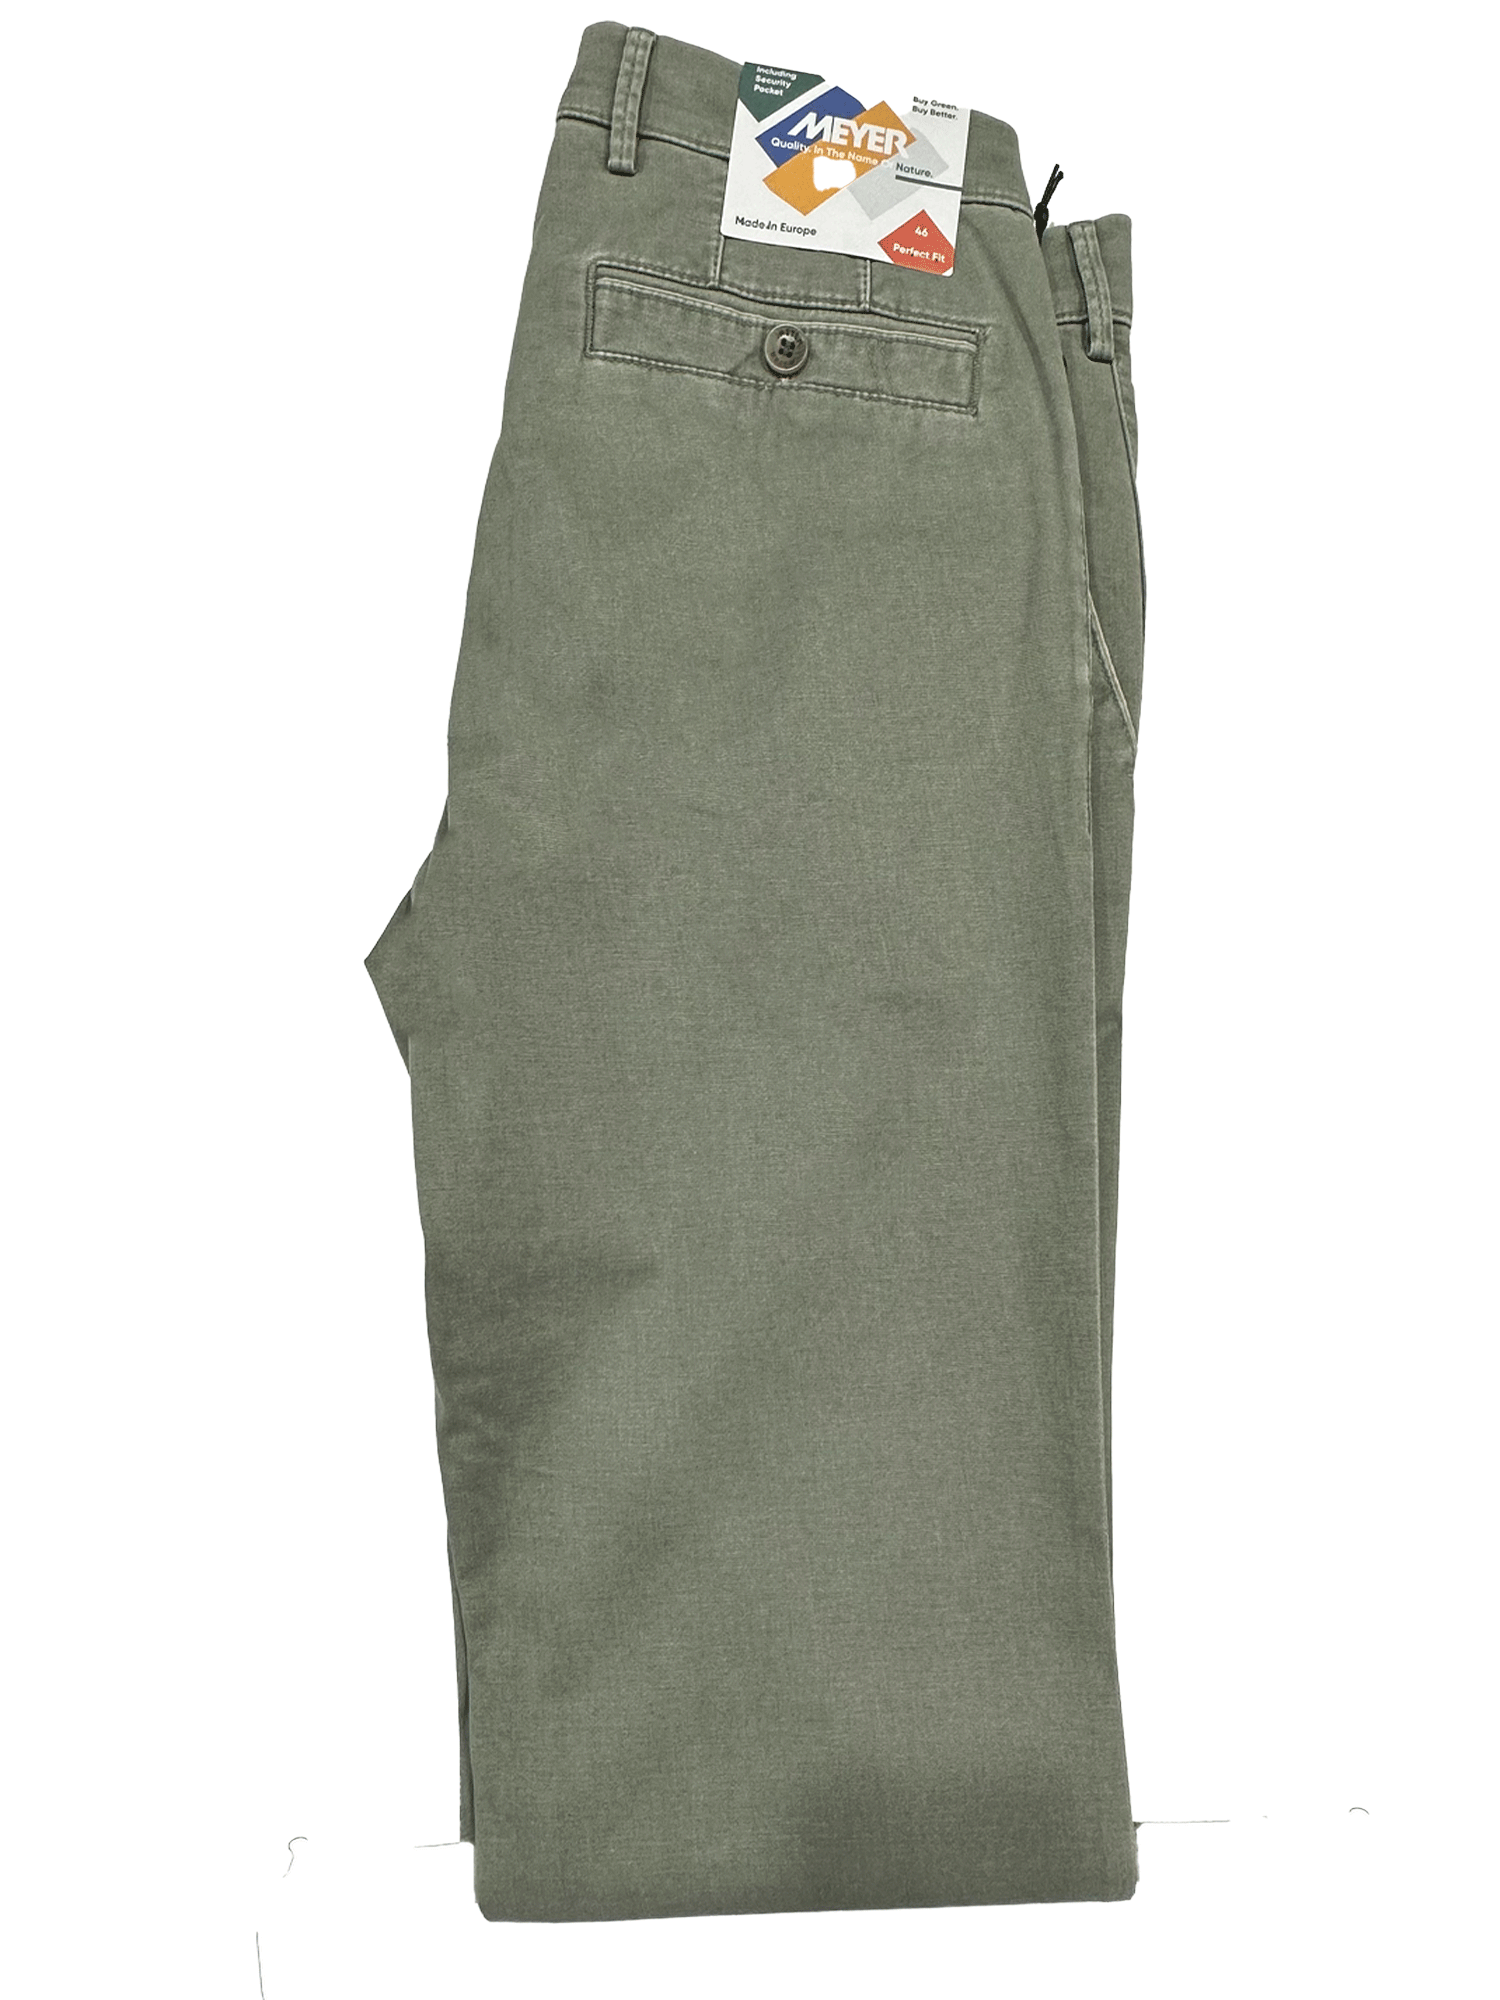 https://harrysformenswear.com.au/products/new-york-5054-25-green